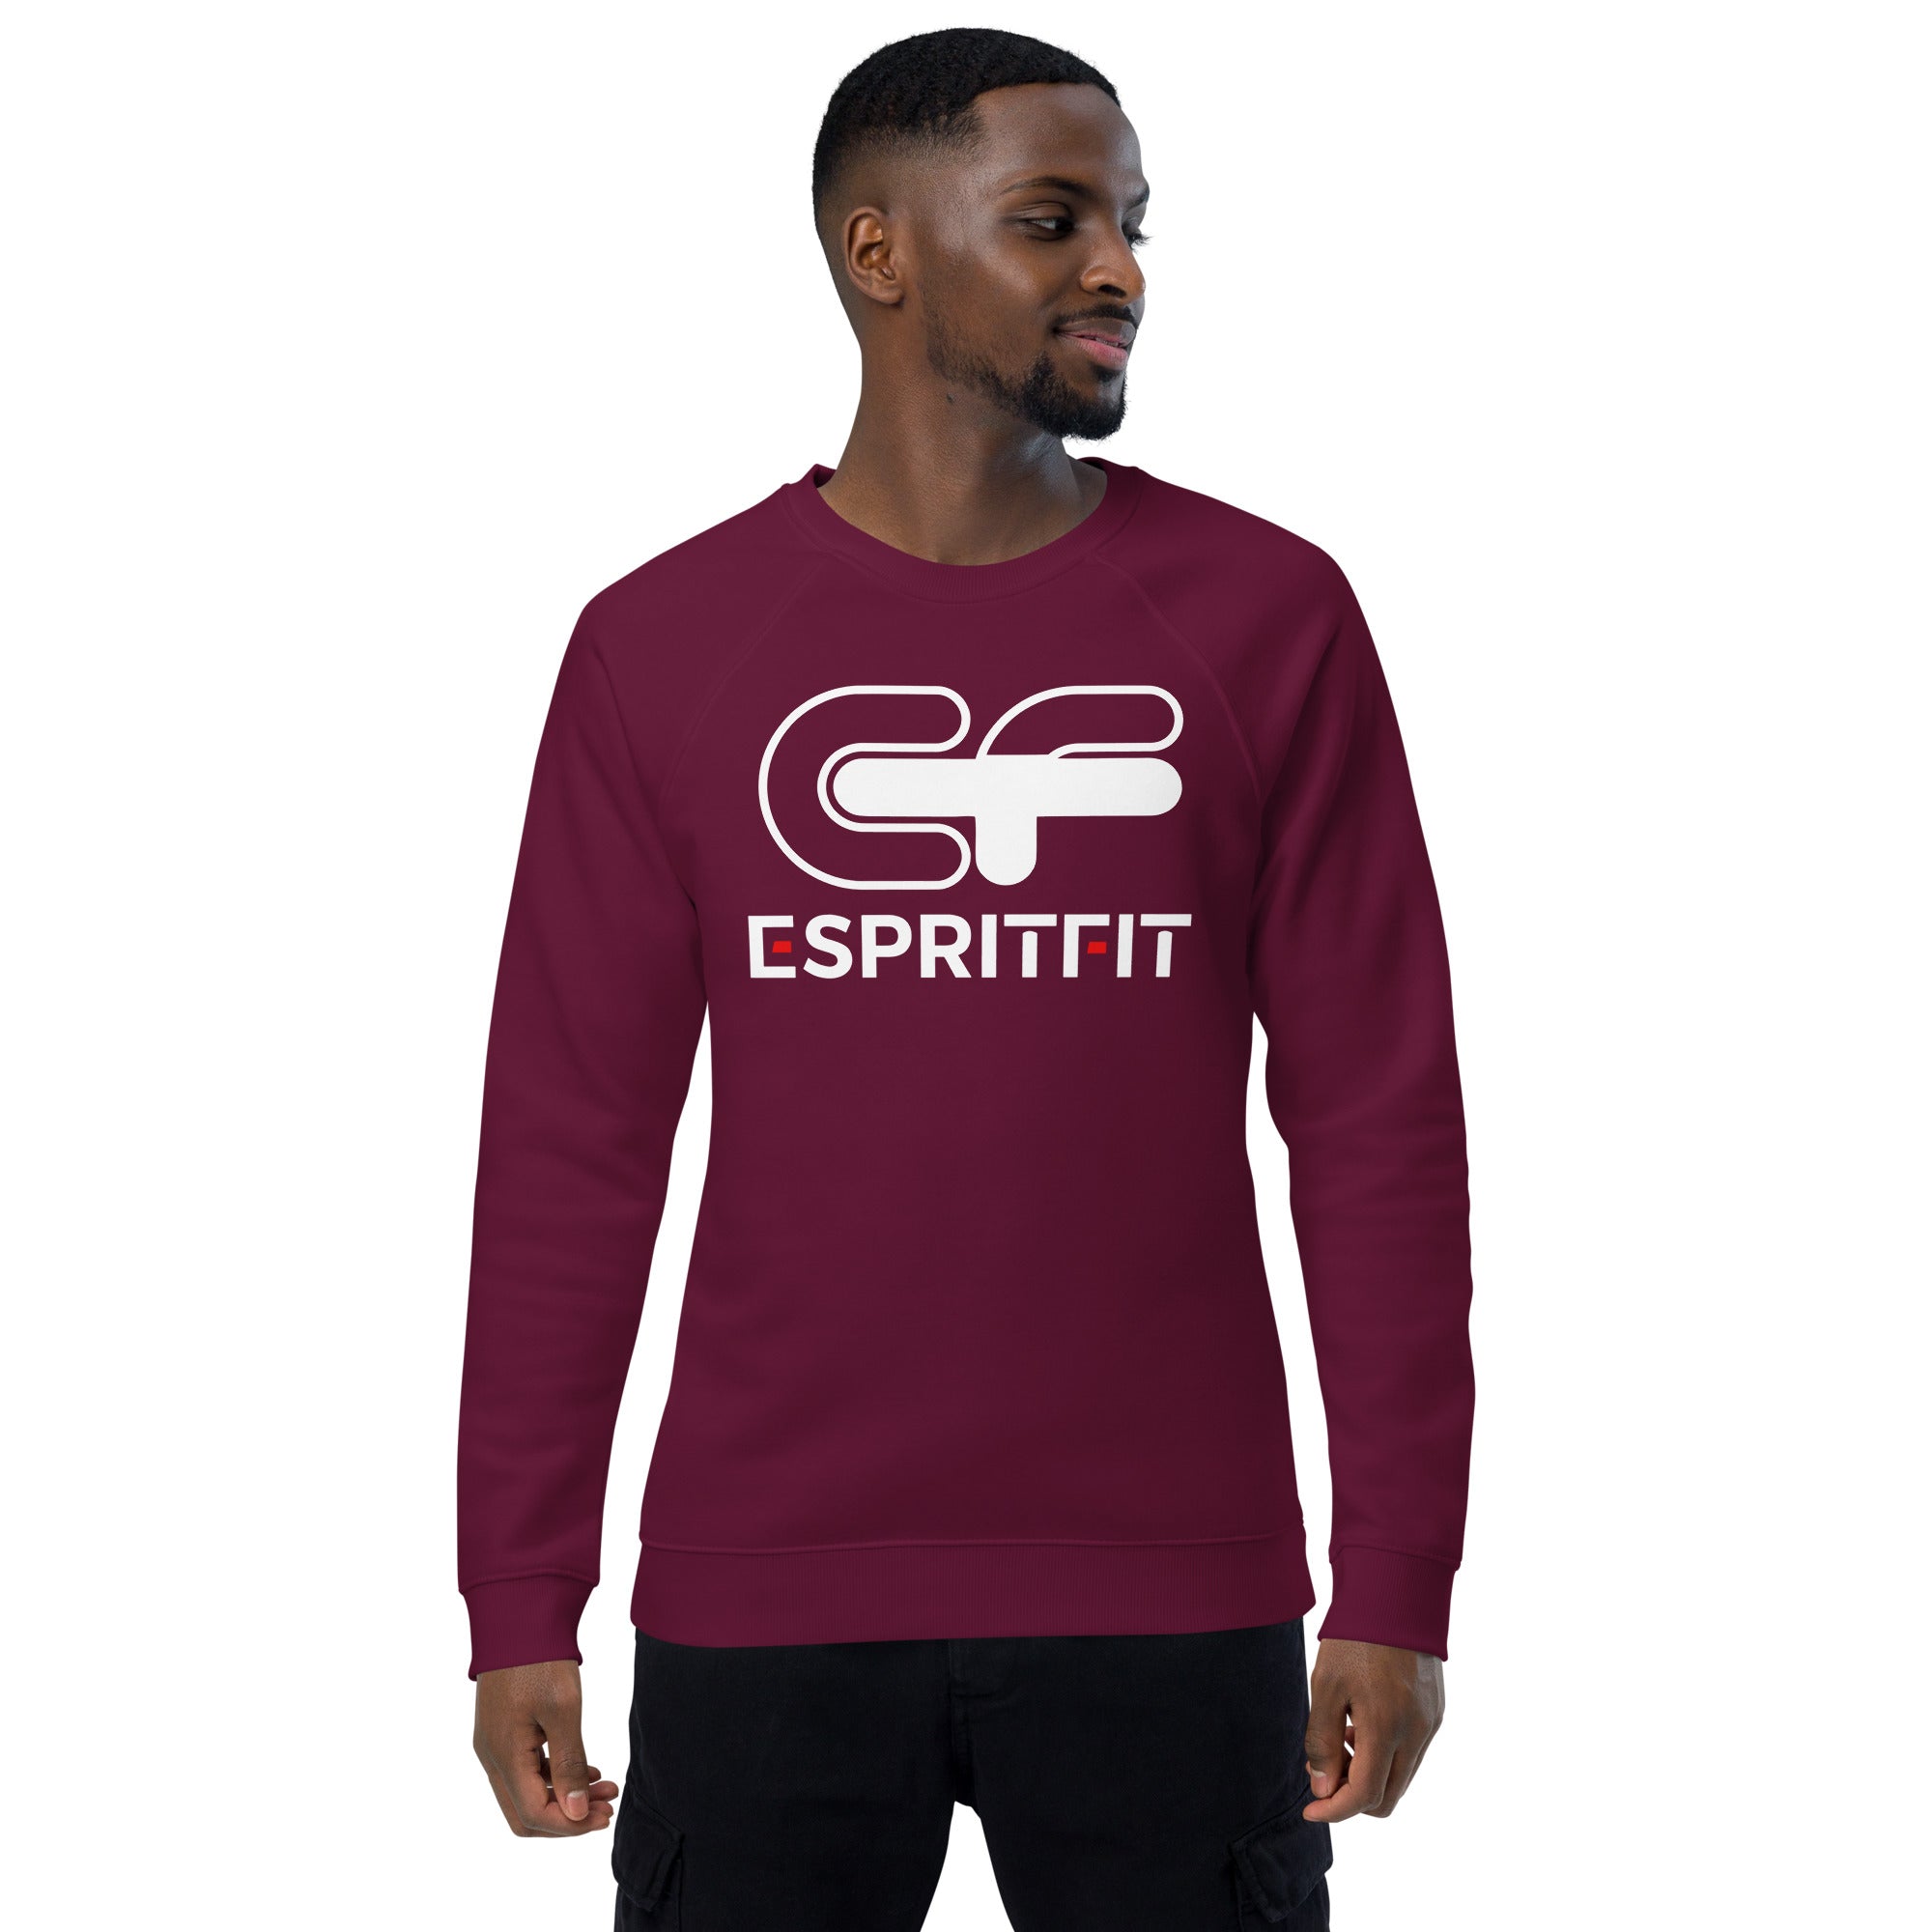 Espritfit Organic Cotton Sweatshirt - Espritfit